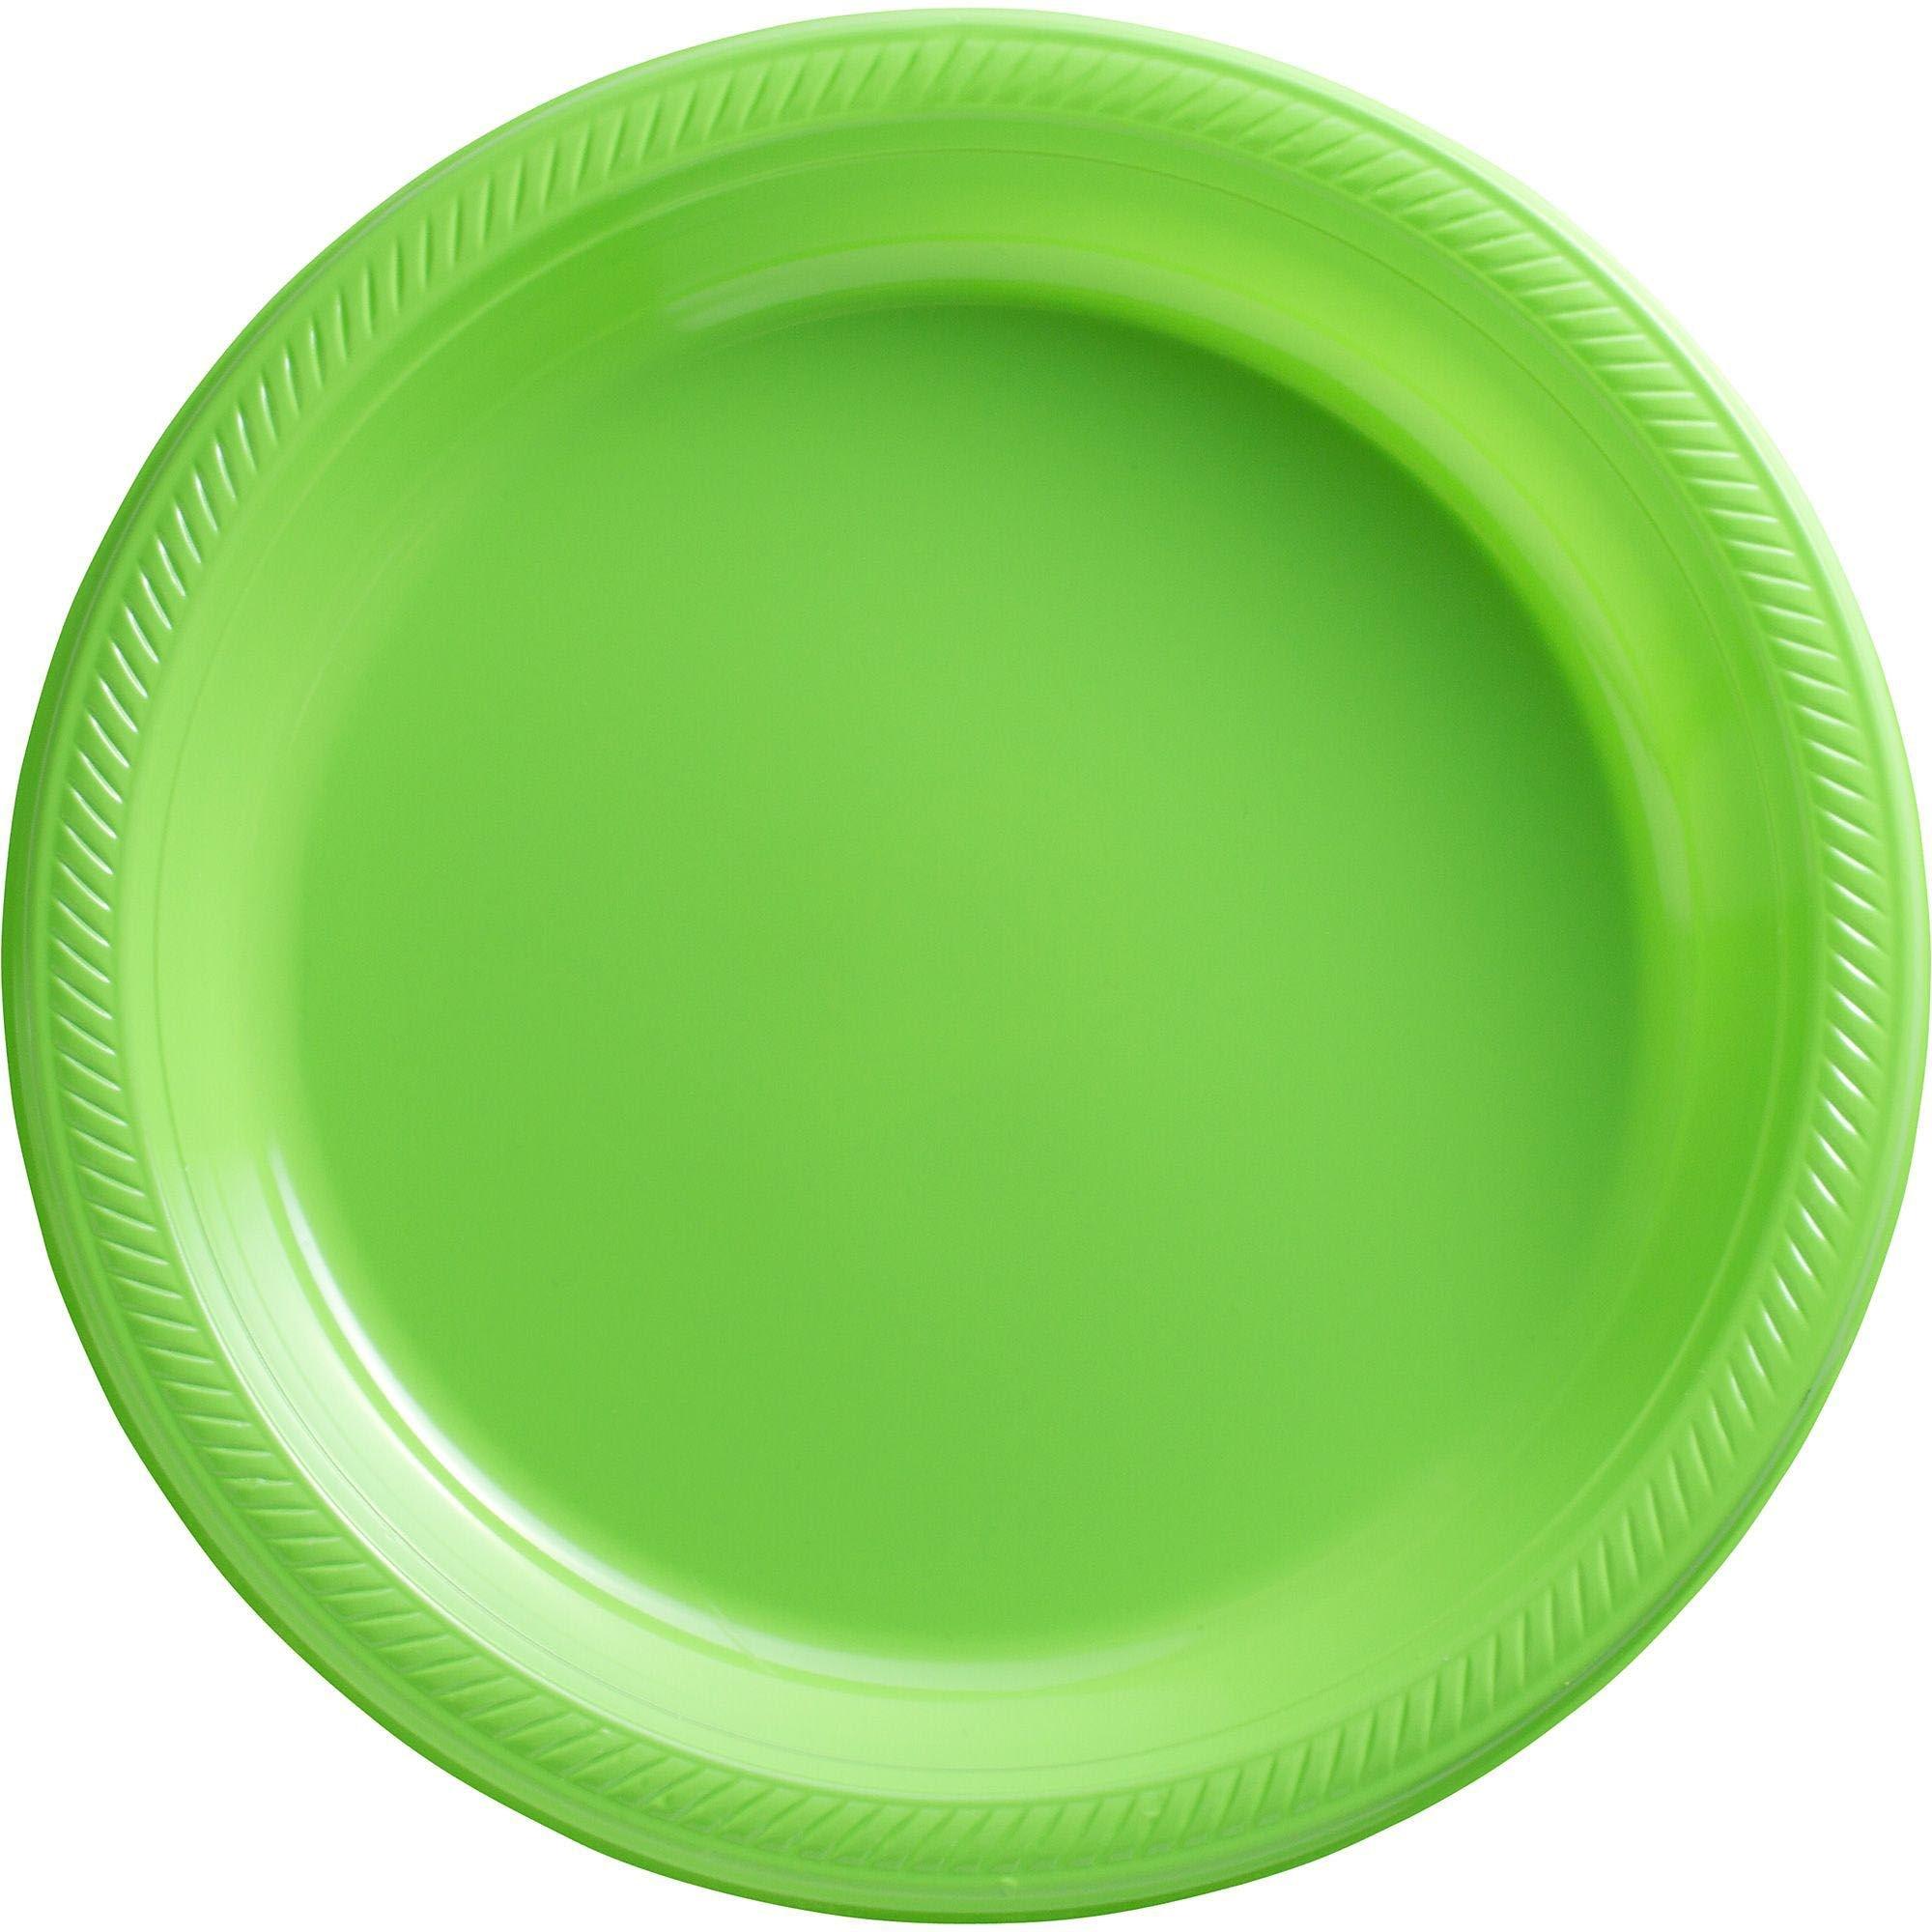 Plastic Dinner Plates, 10.25in